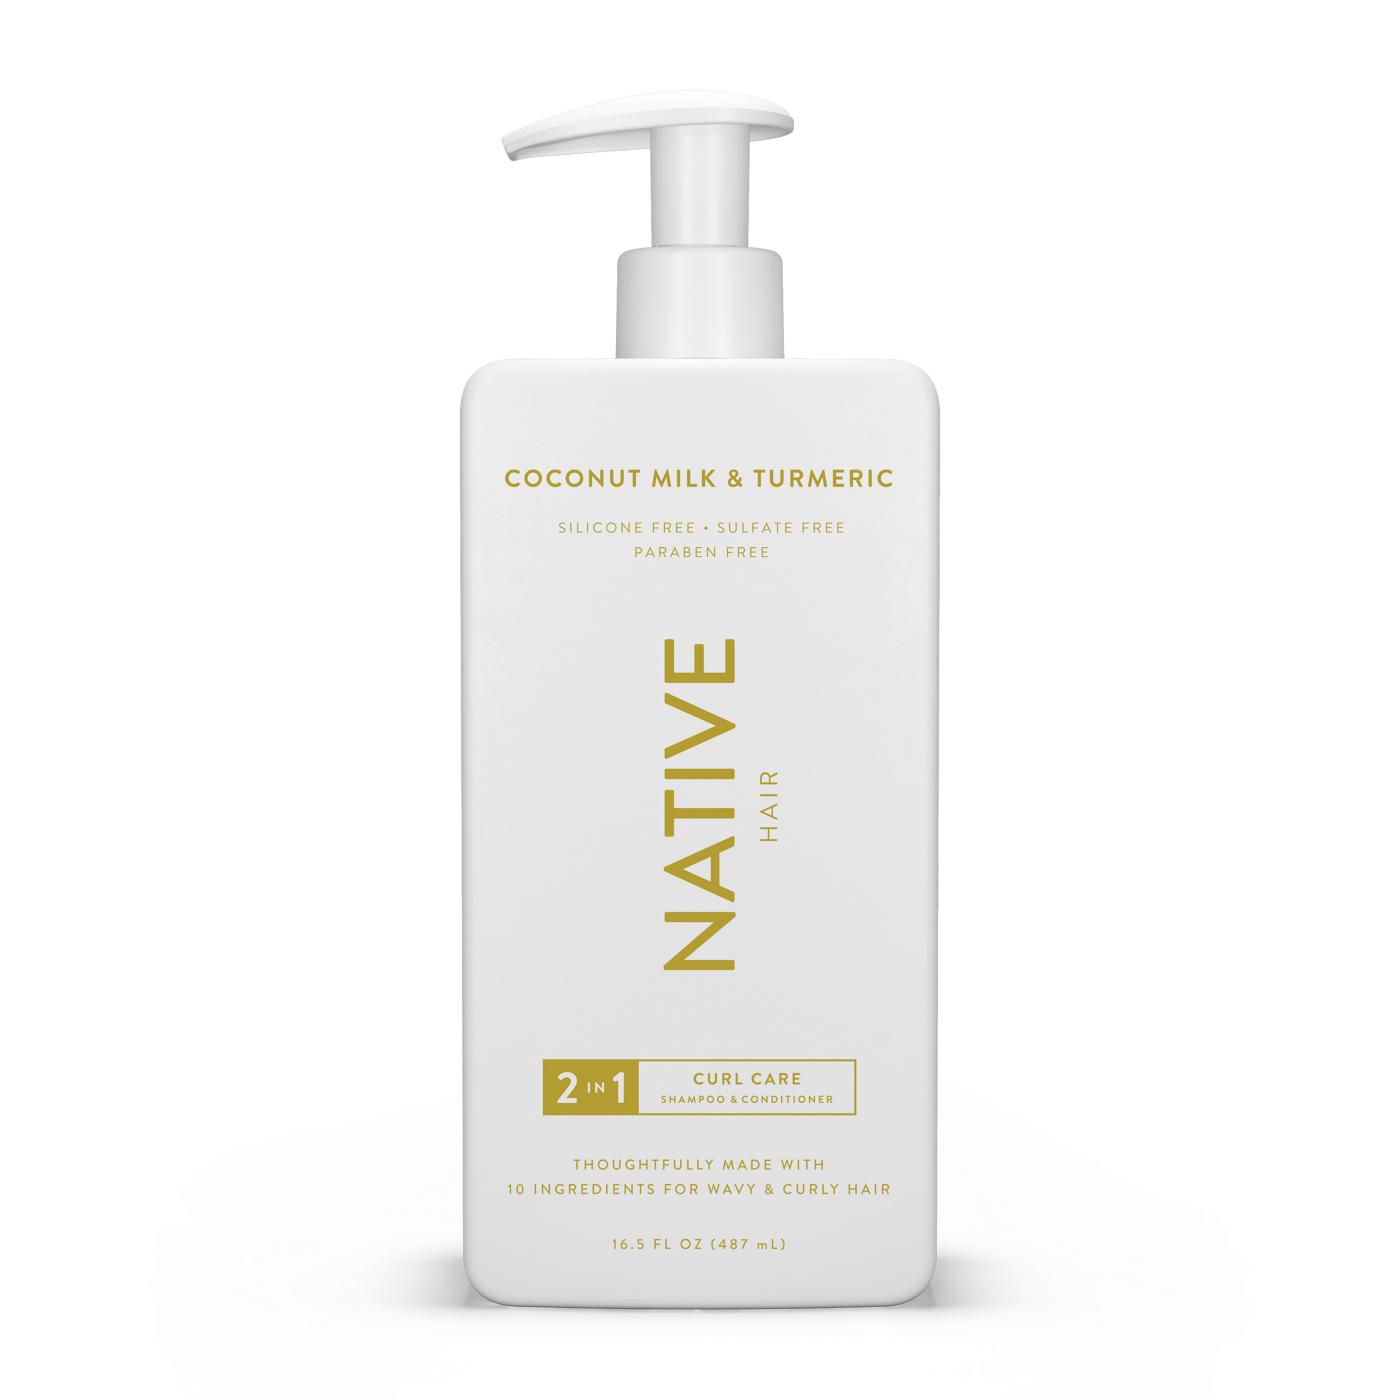 Native Curl Care 2in1 Shampoo & Conditioner - Coconut Milk & Turmeric; image 1 of 2